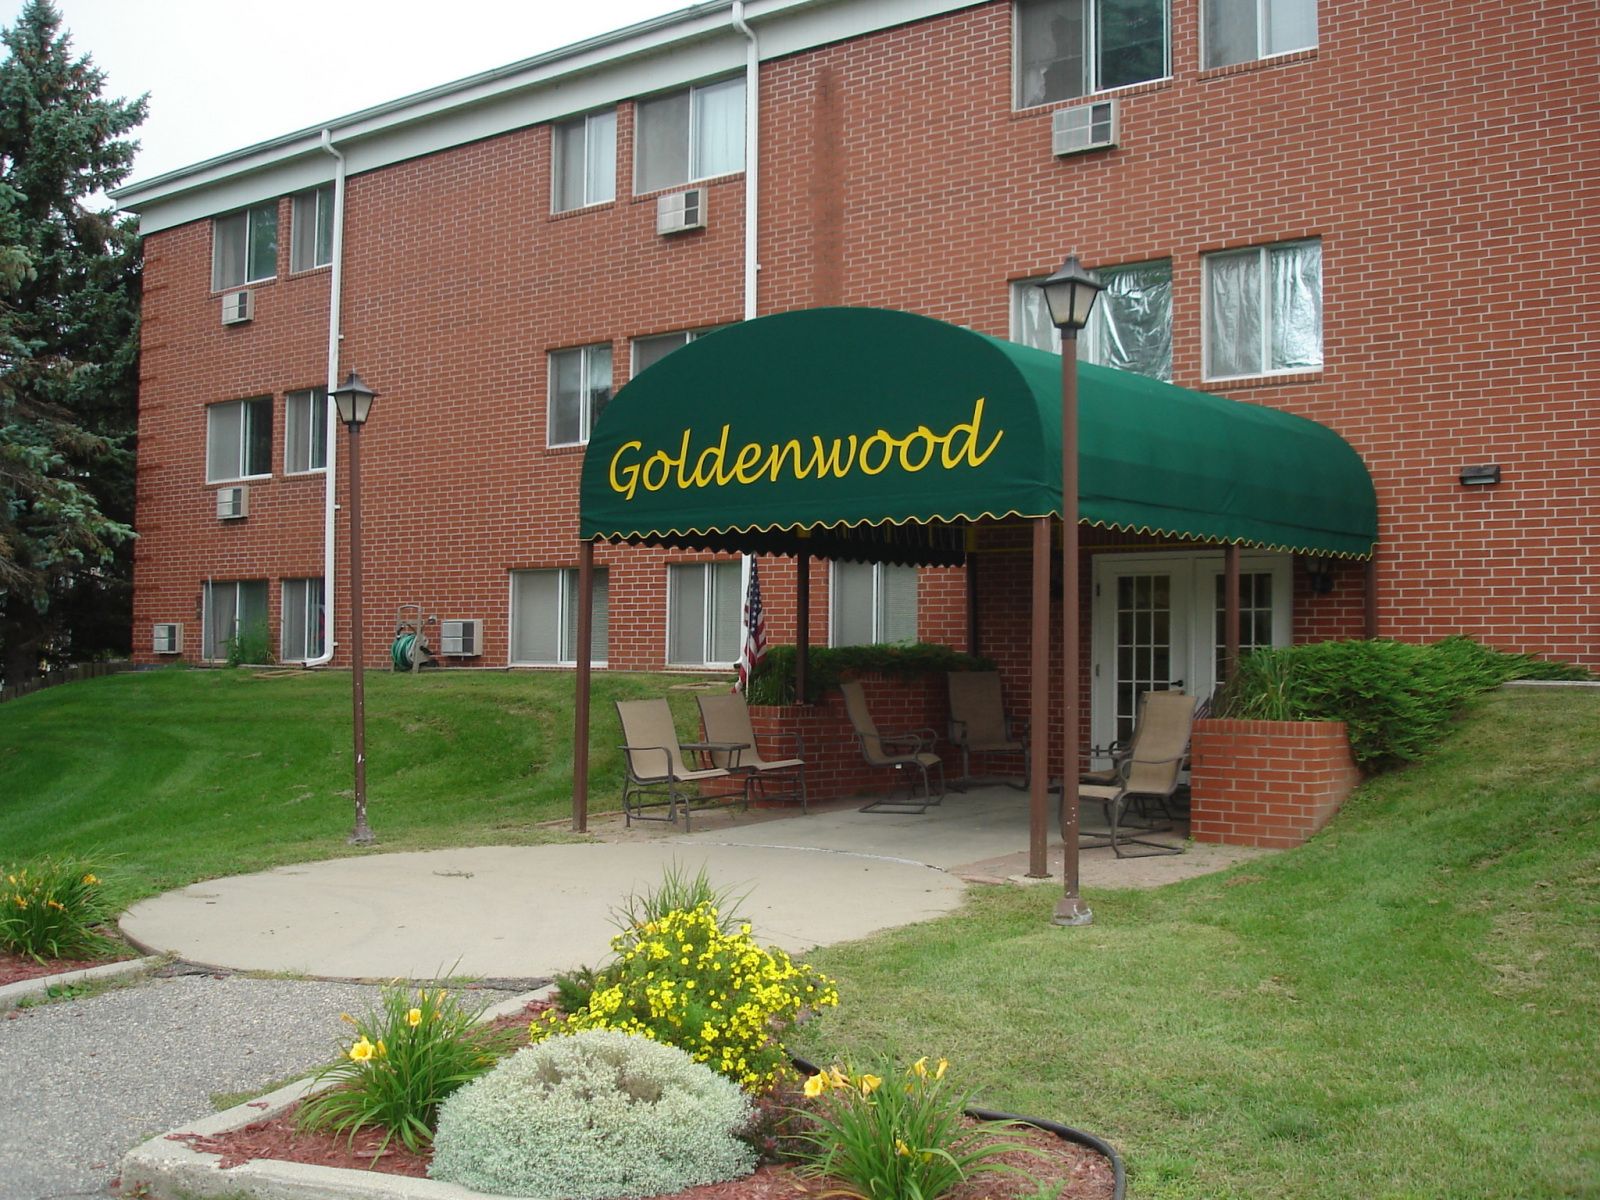 Goldenwood-Entrance-2